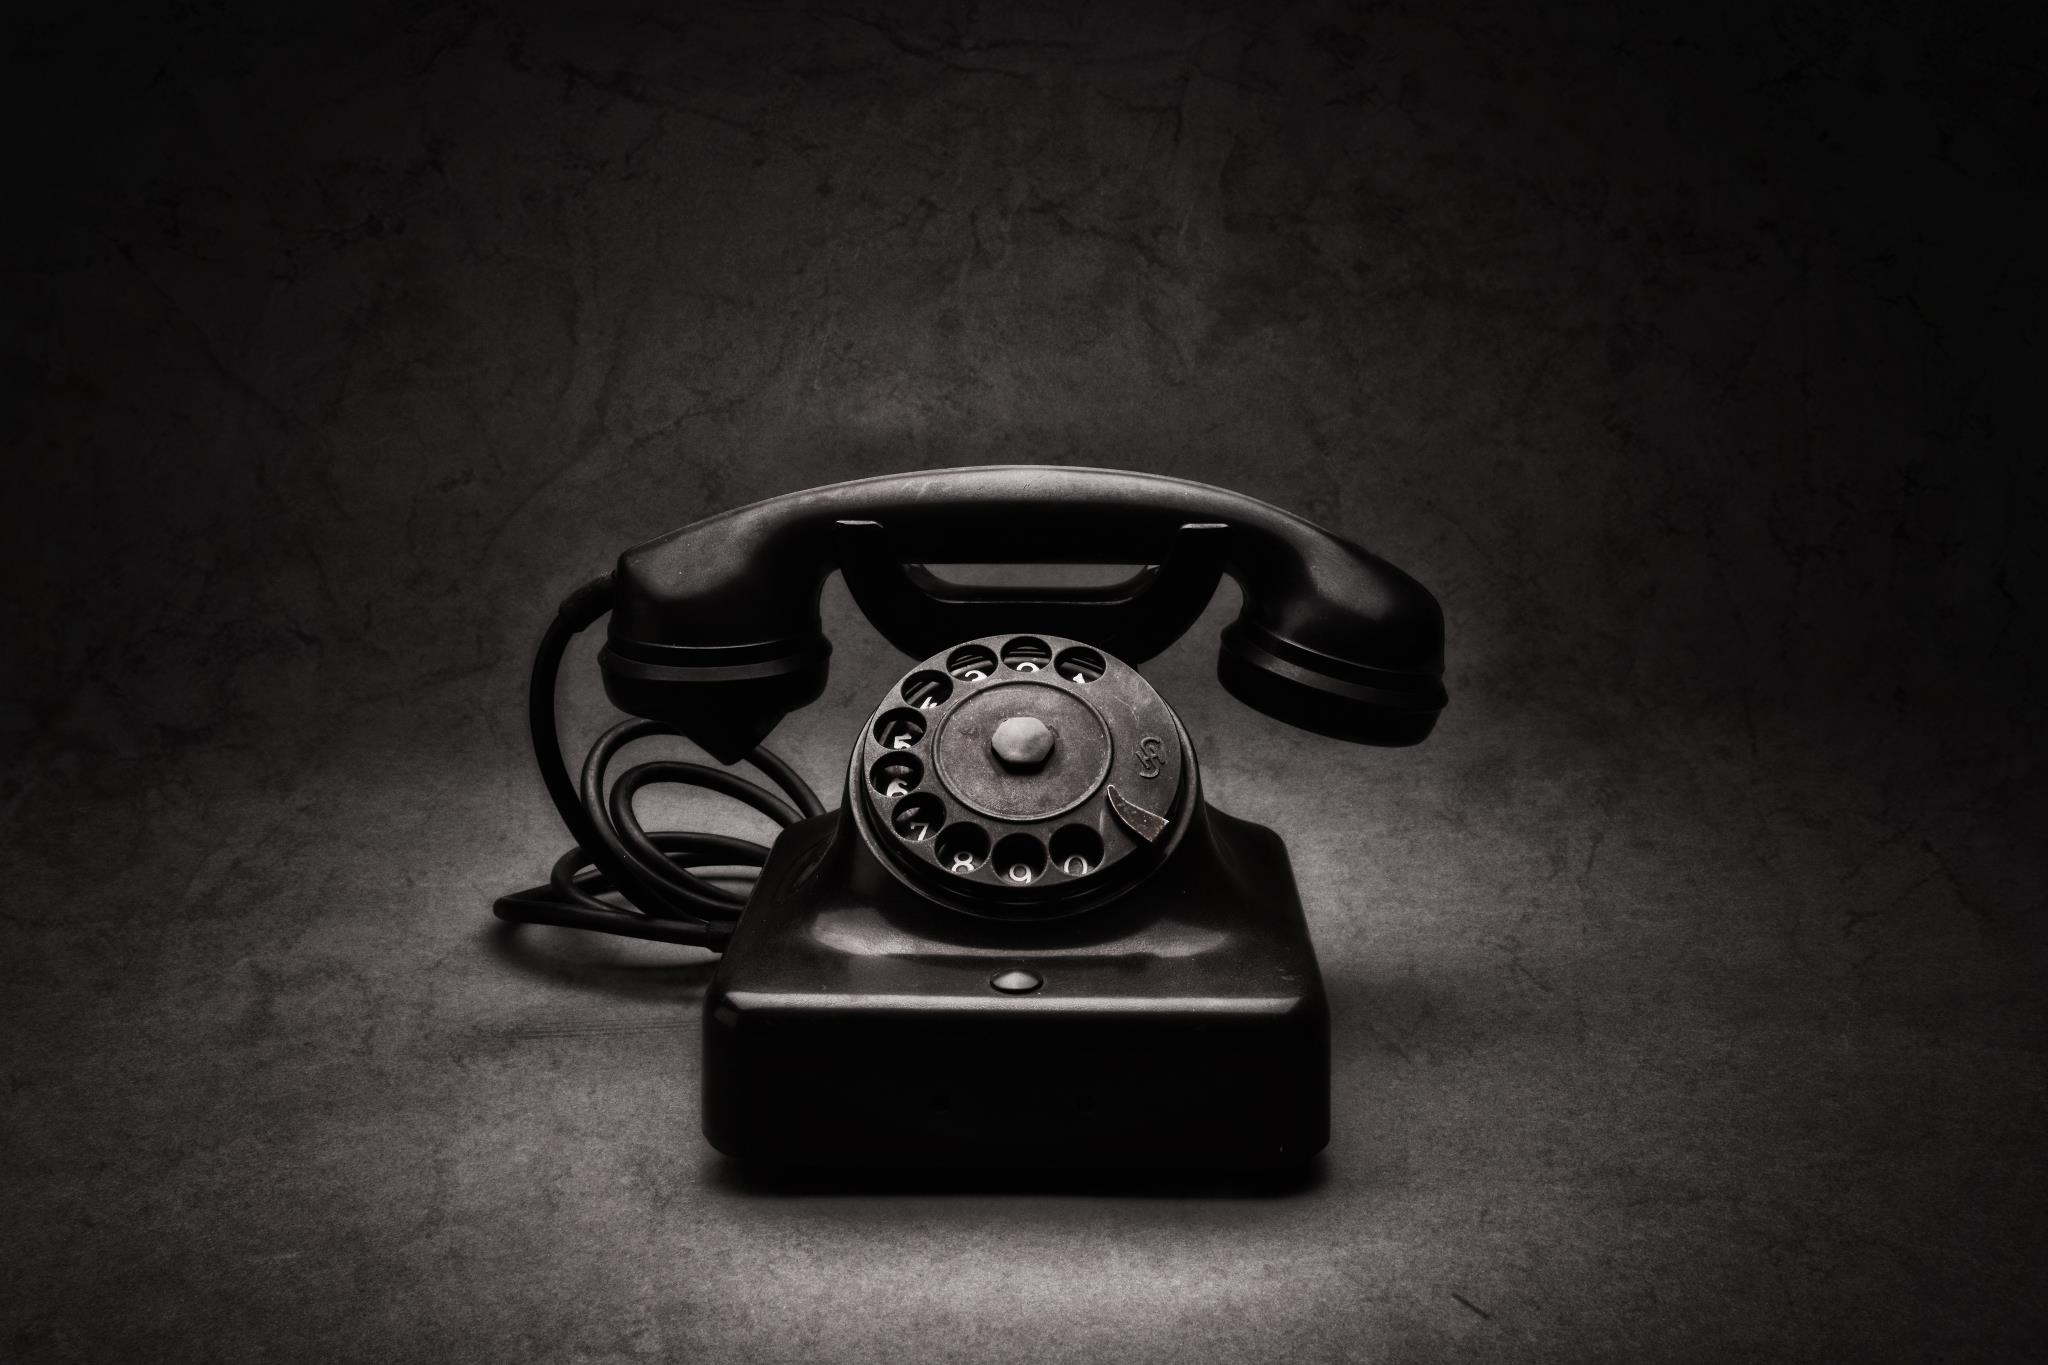 Включи звук старый телефон. Старинный телефон. Телефон арт. Старый телефон арт. Старинный телефонный звонок.